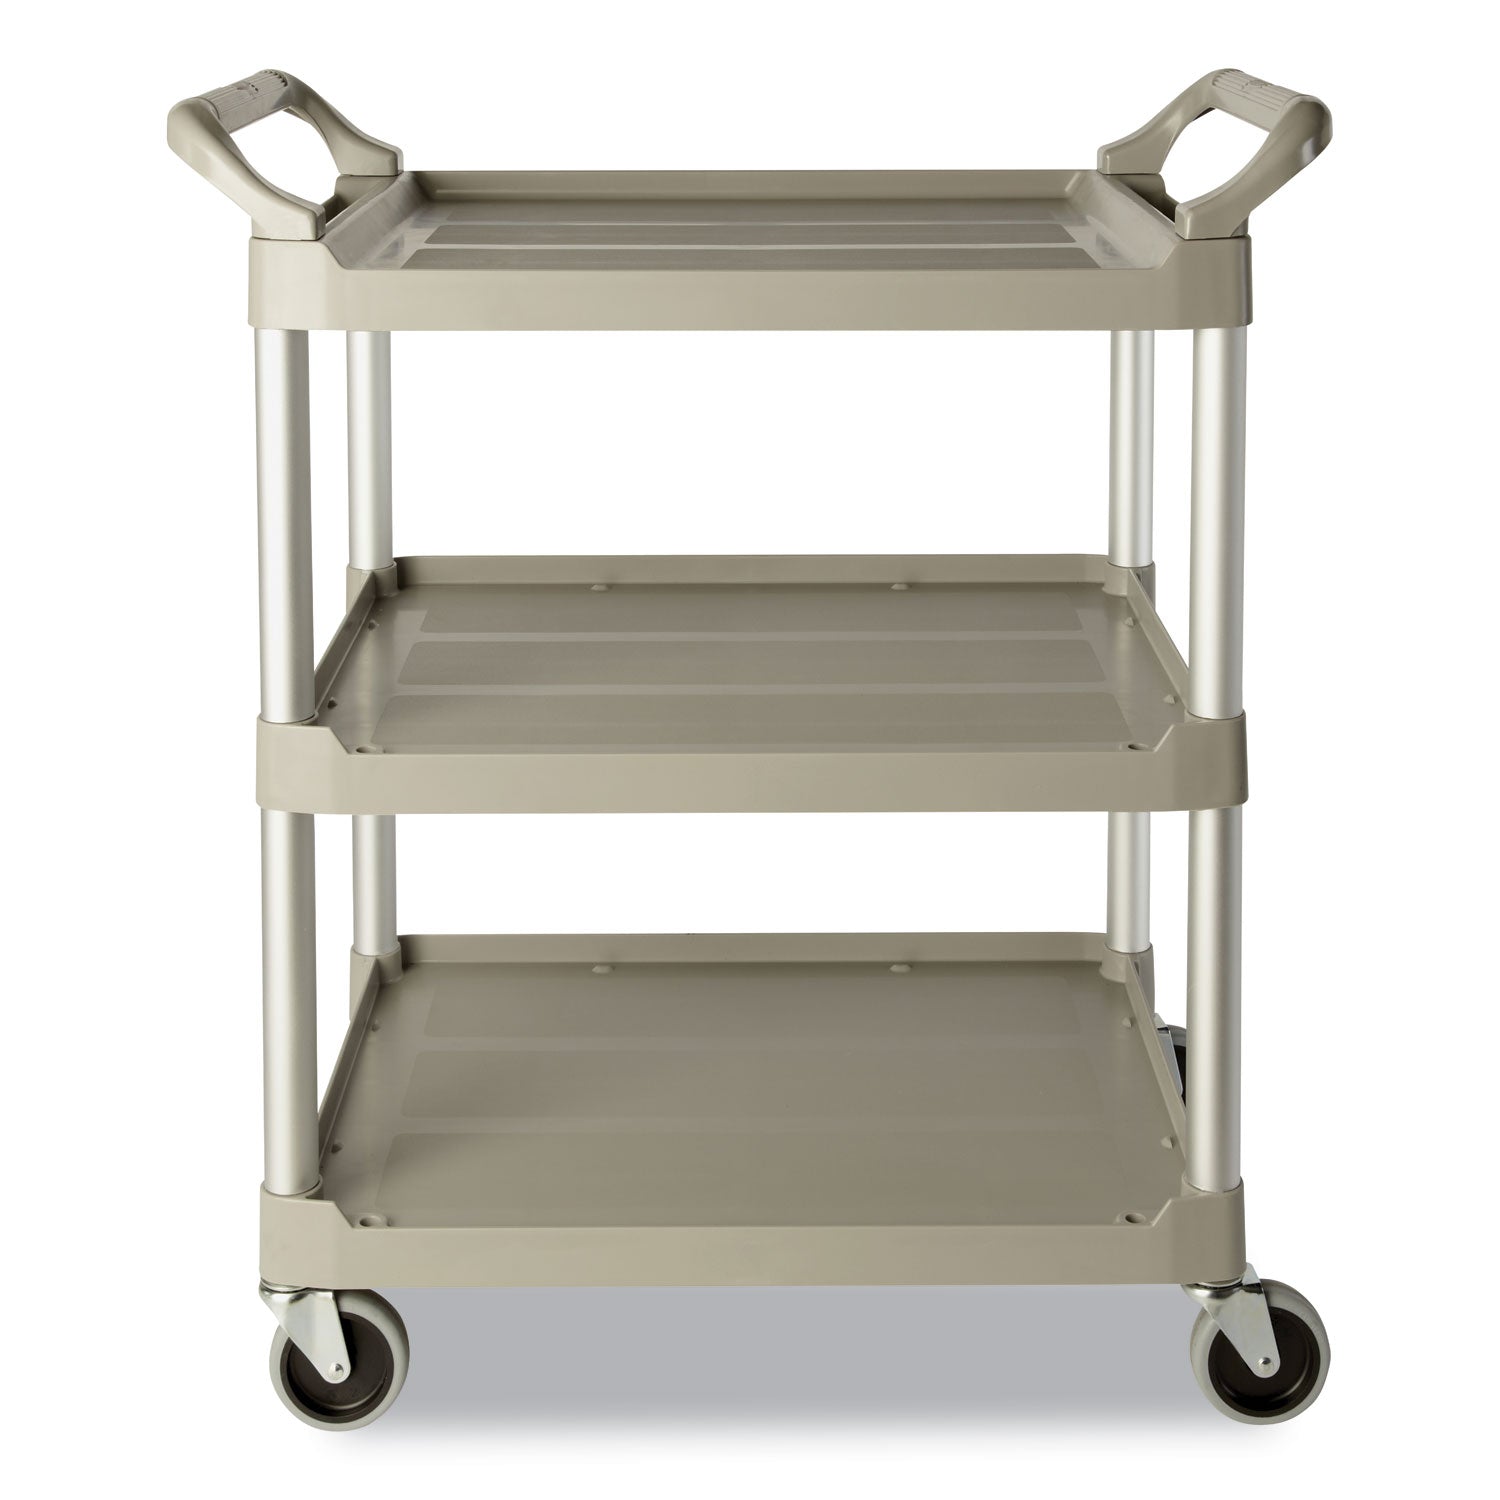 Three-Shelf Service Cart, Plastic, 3 Shelves, 200 lb Capacity, 18.63" x 33.63" x 37.75", Platinum - 